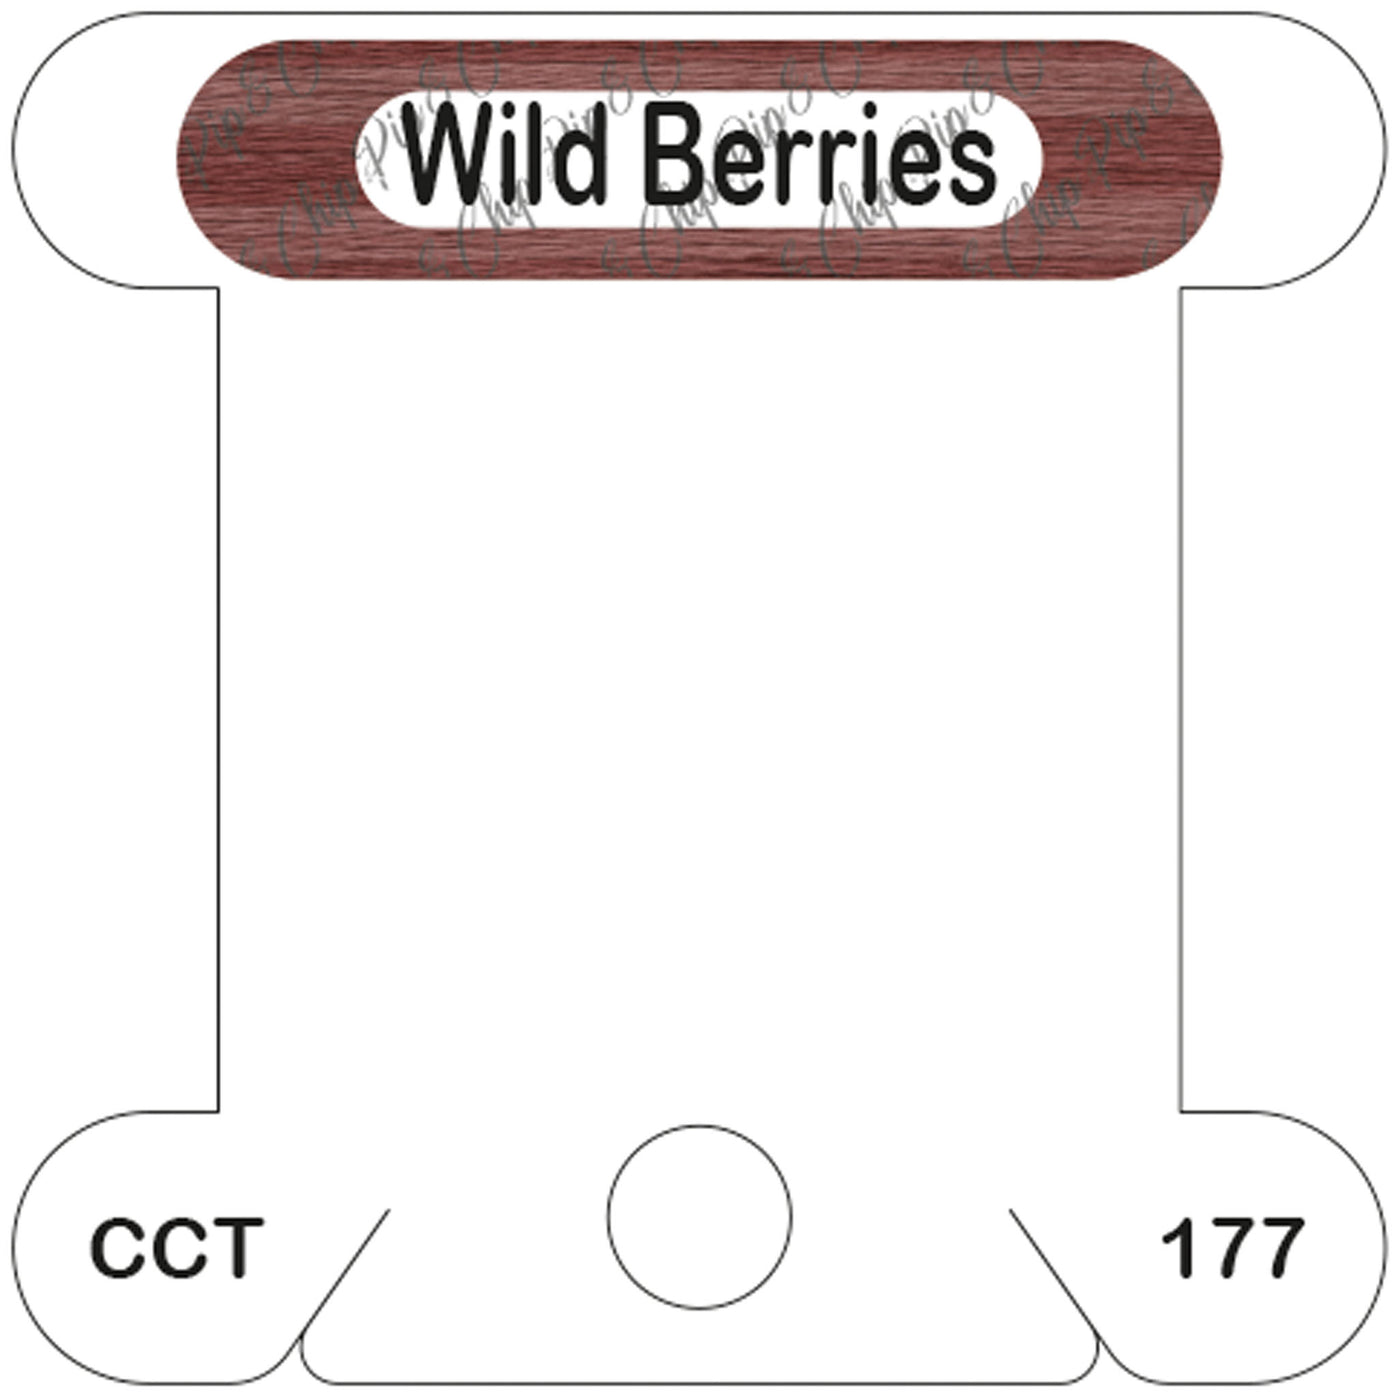 Classic Colorworks Wild Berries acrylic bobbin